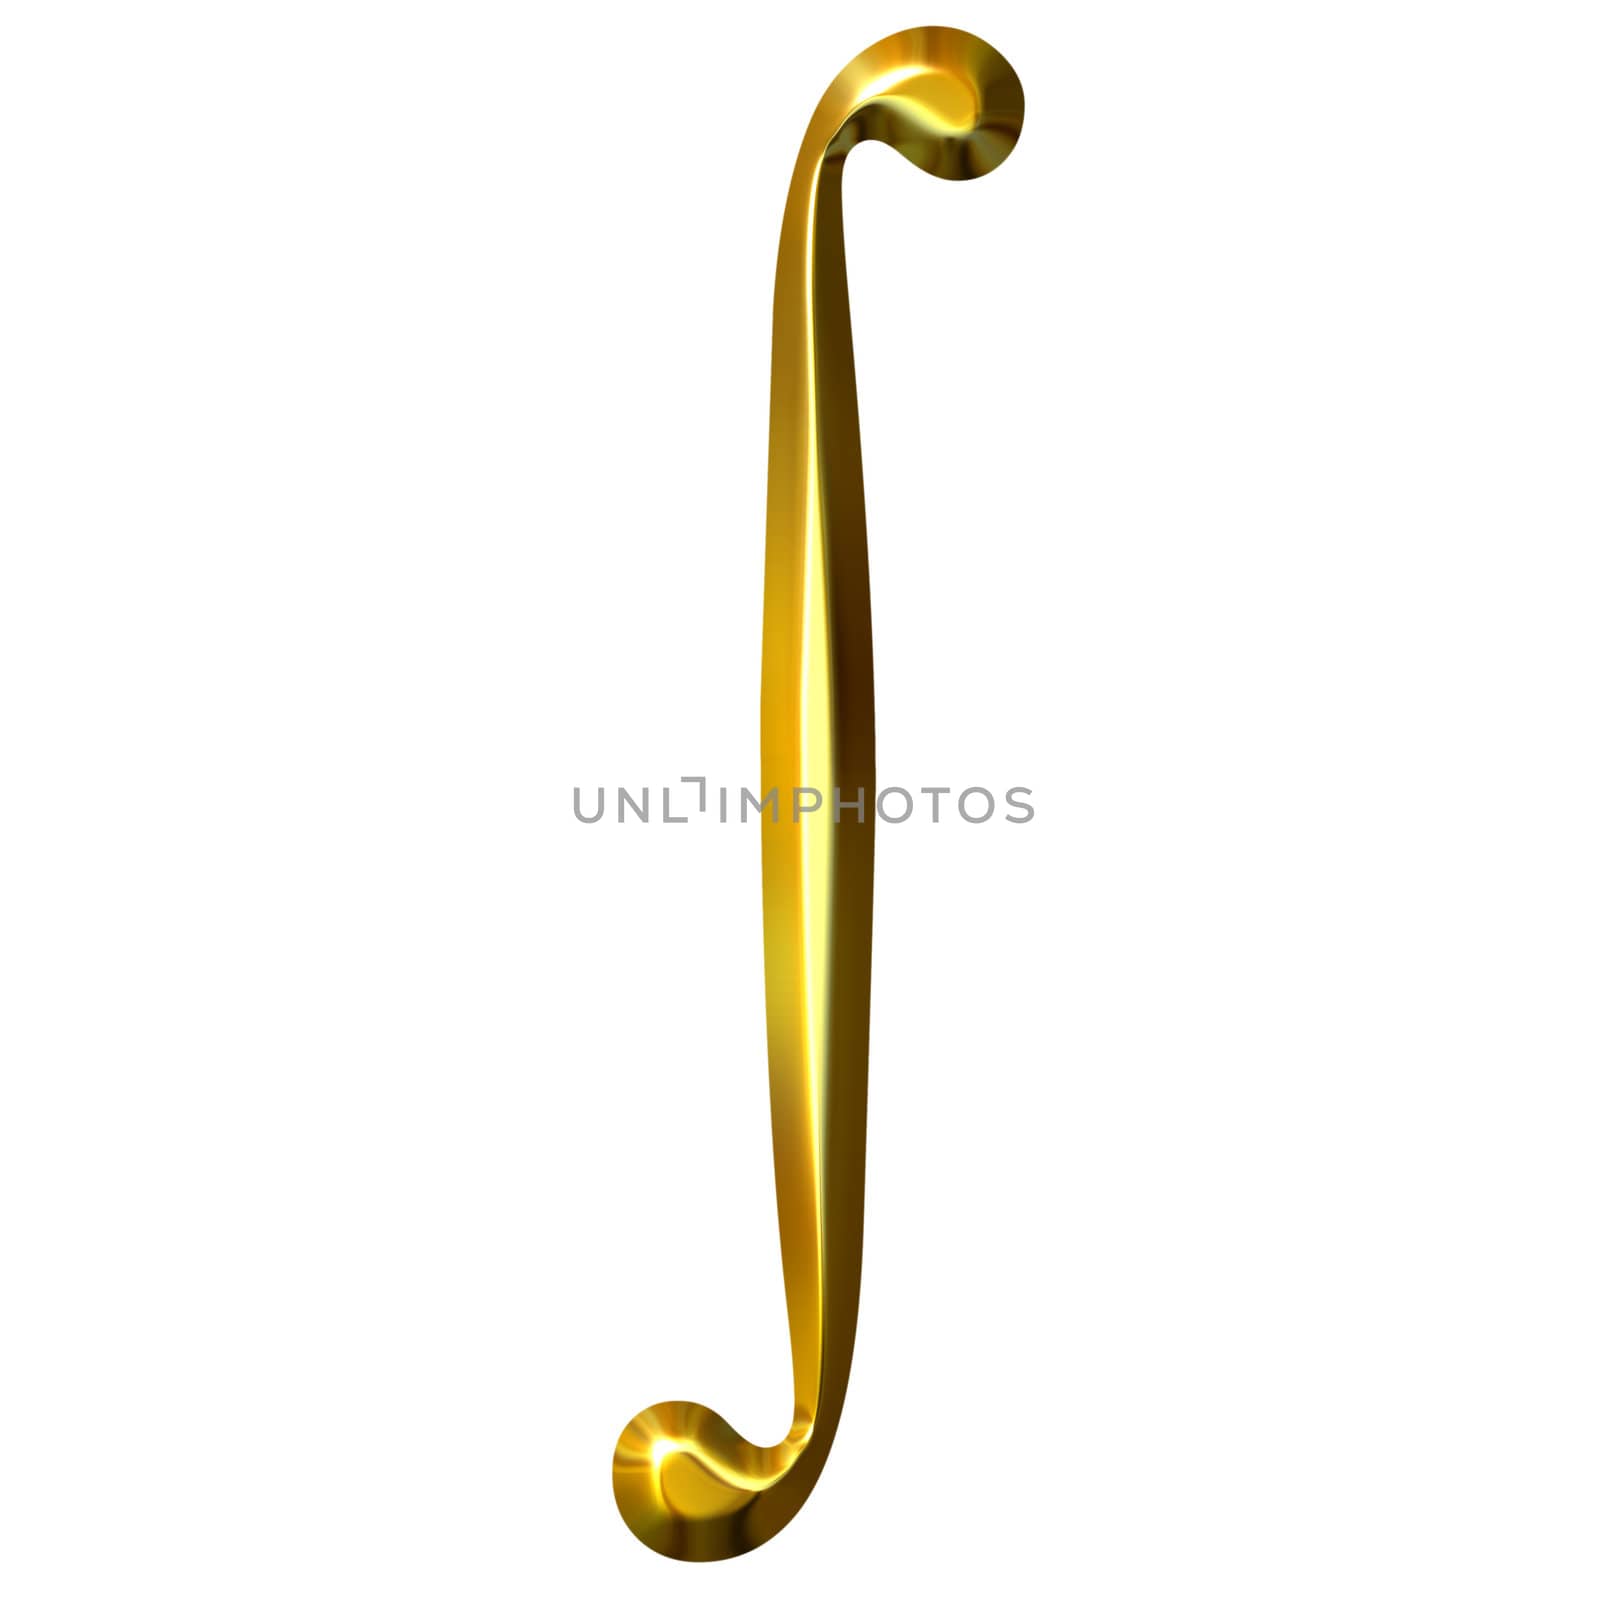 3D Golden Integral Symbol by Georgios